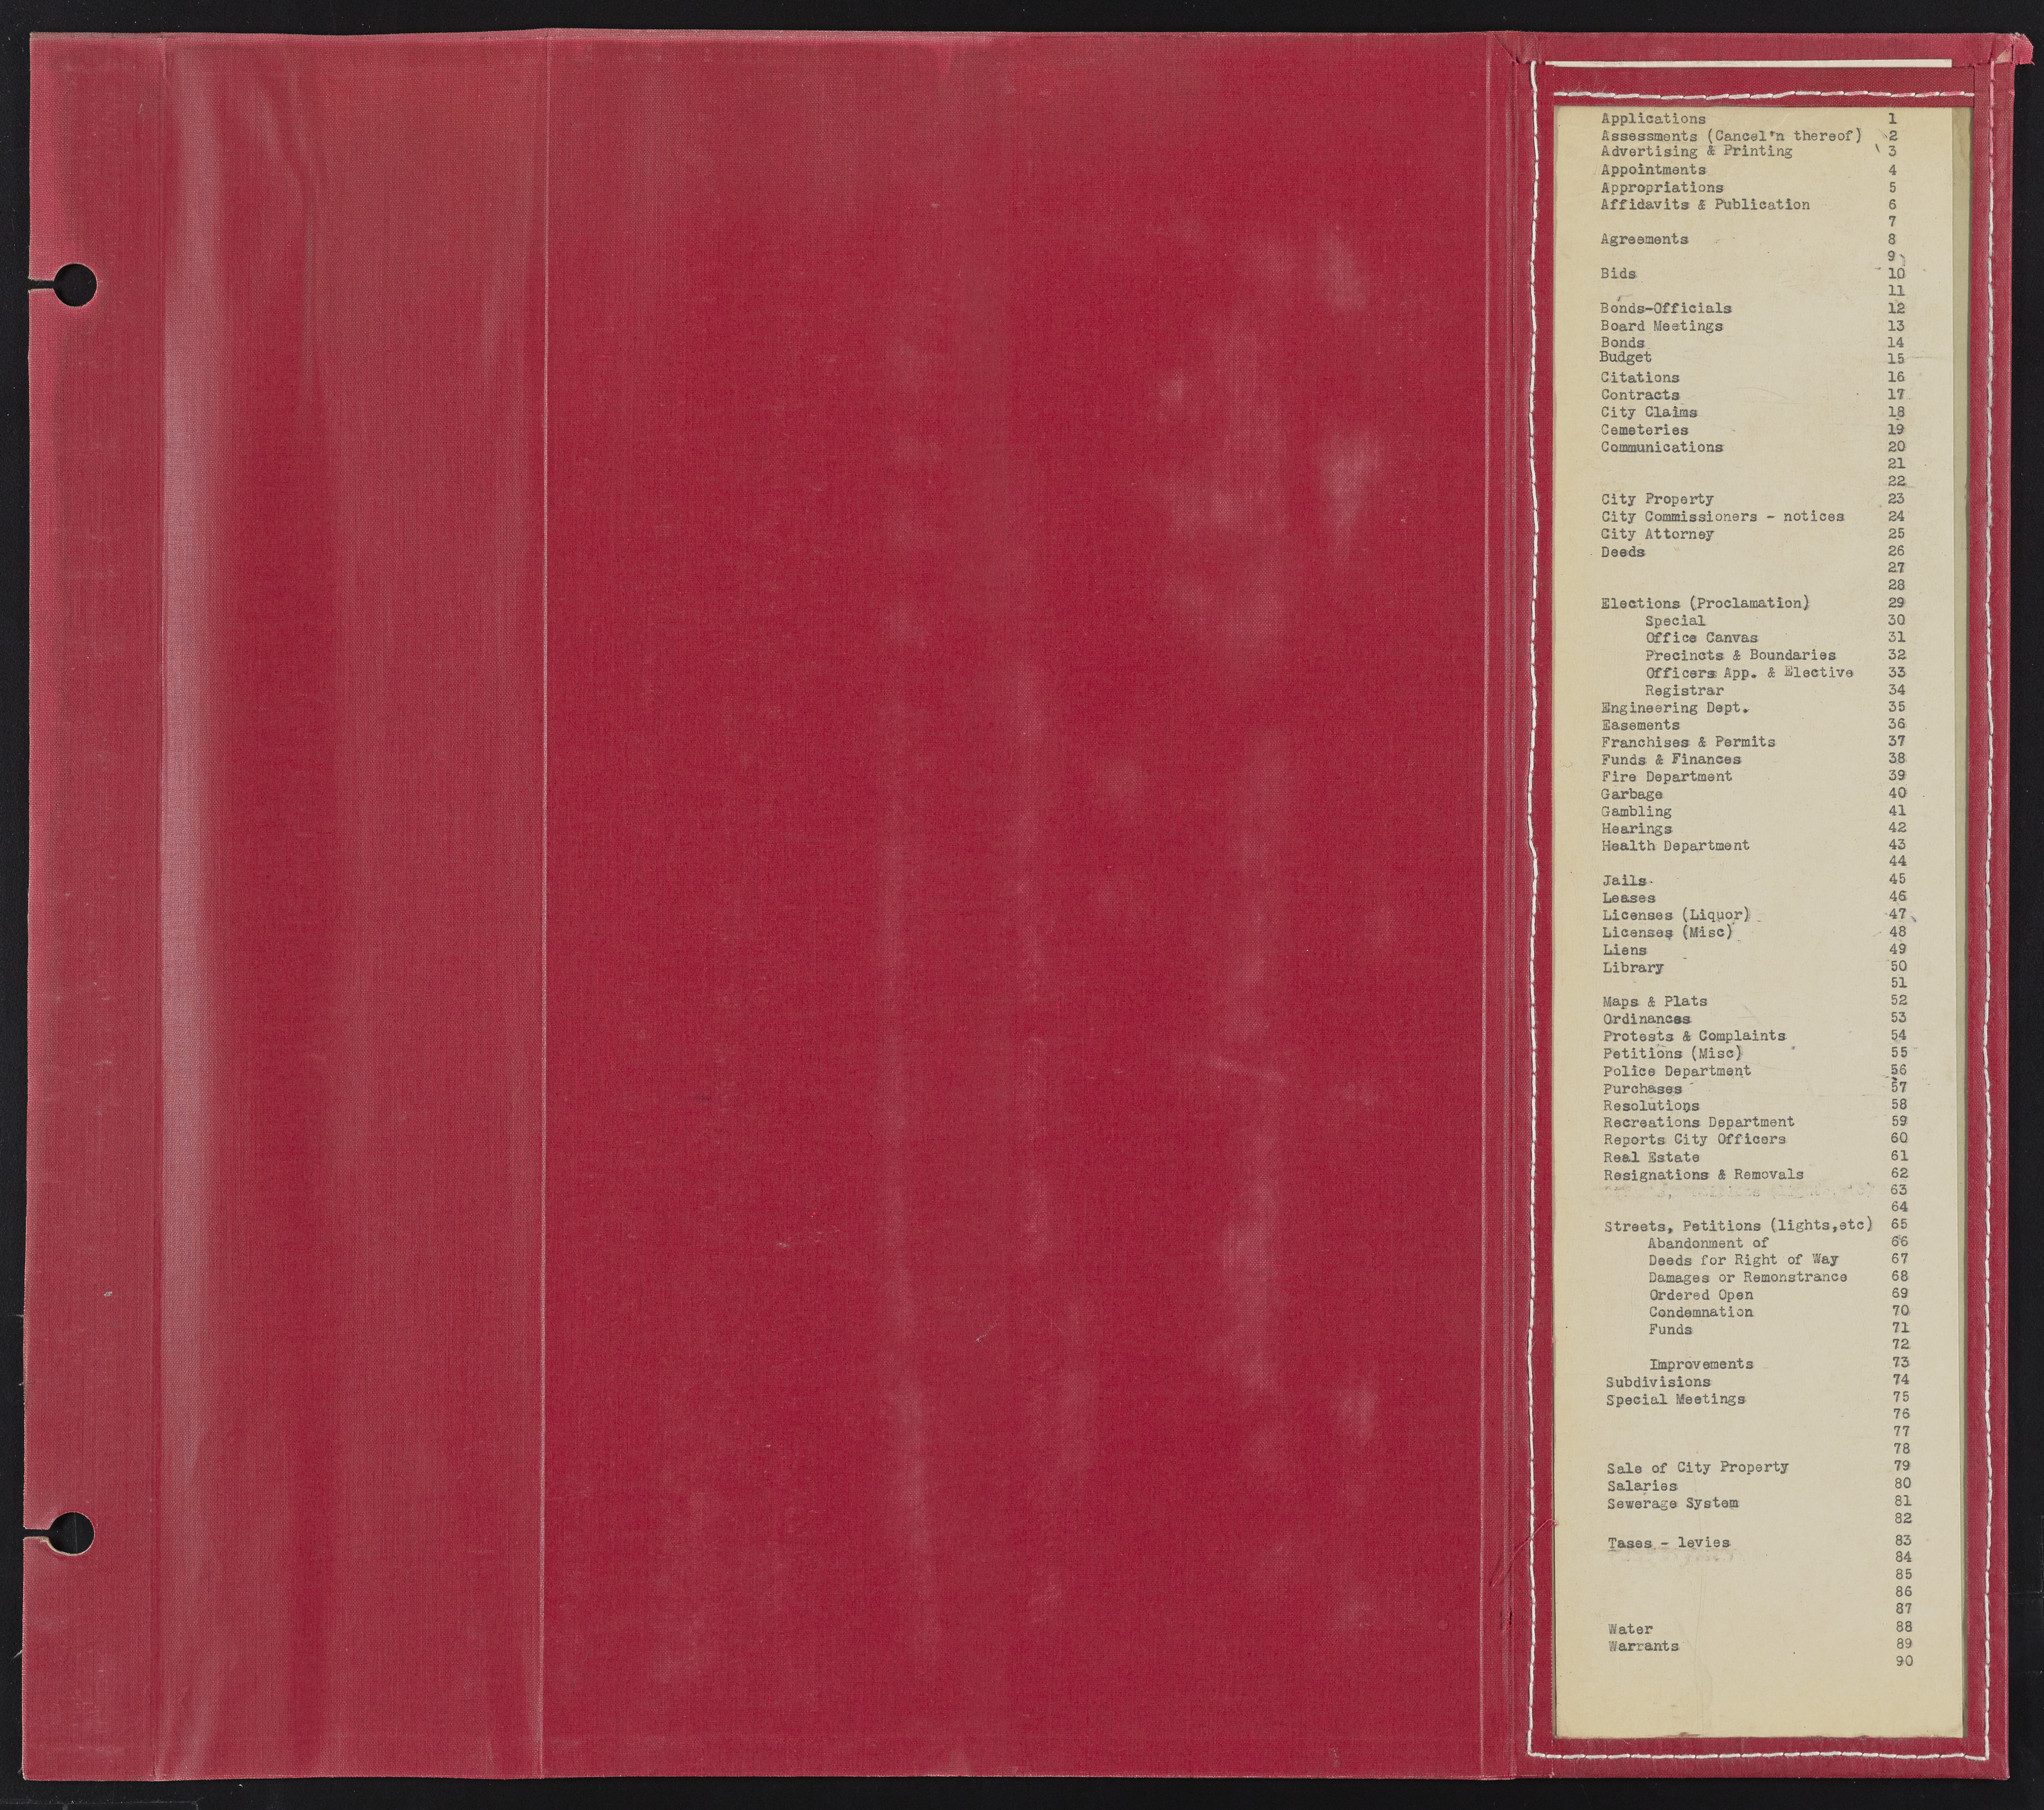 Las Vegas City Commission Minutes Index 1, 1911-1960: documents, item 349